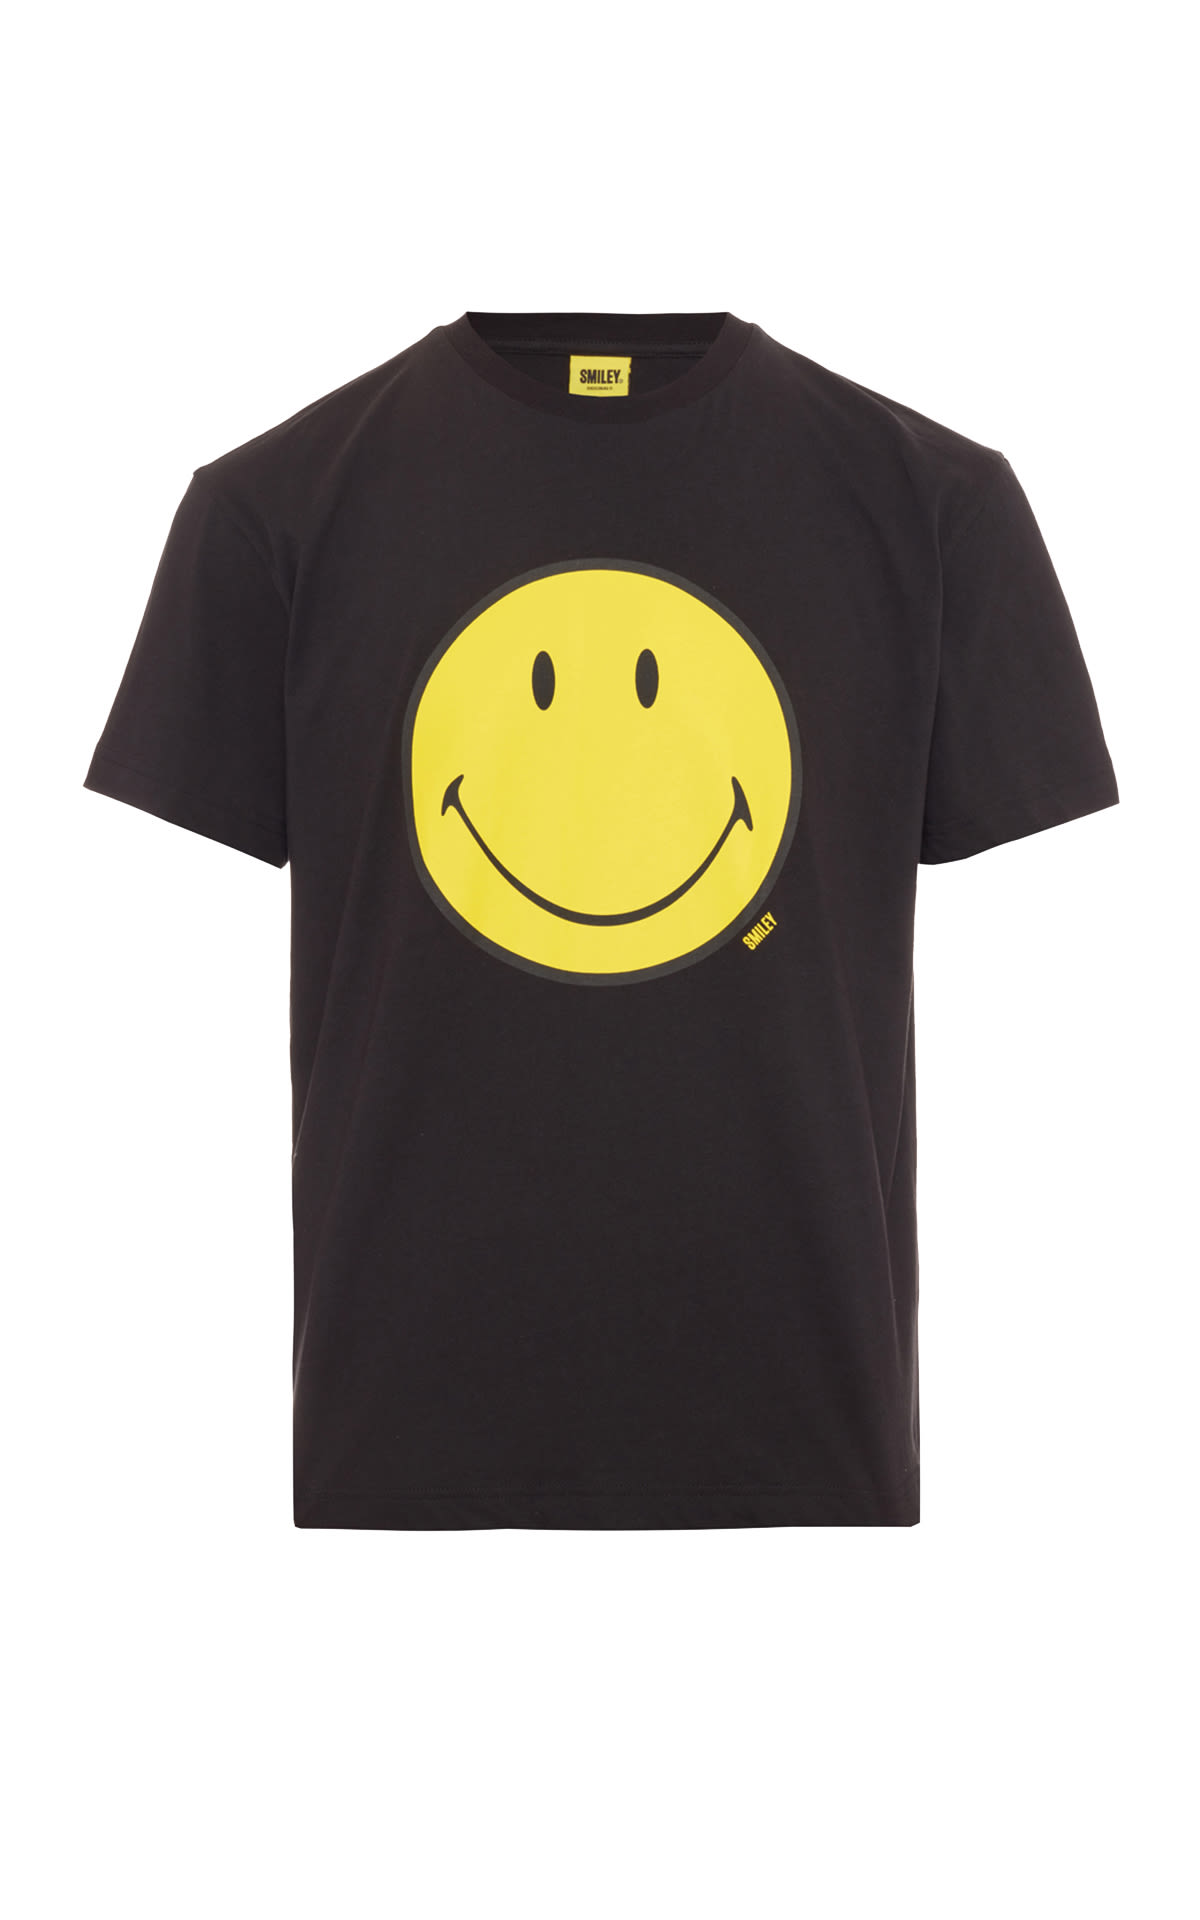 The Smiley Company black t-shirt La Vallée Village